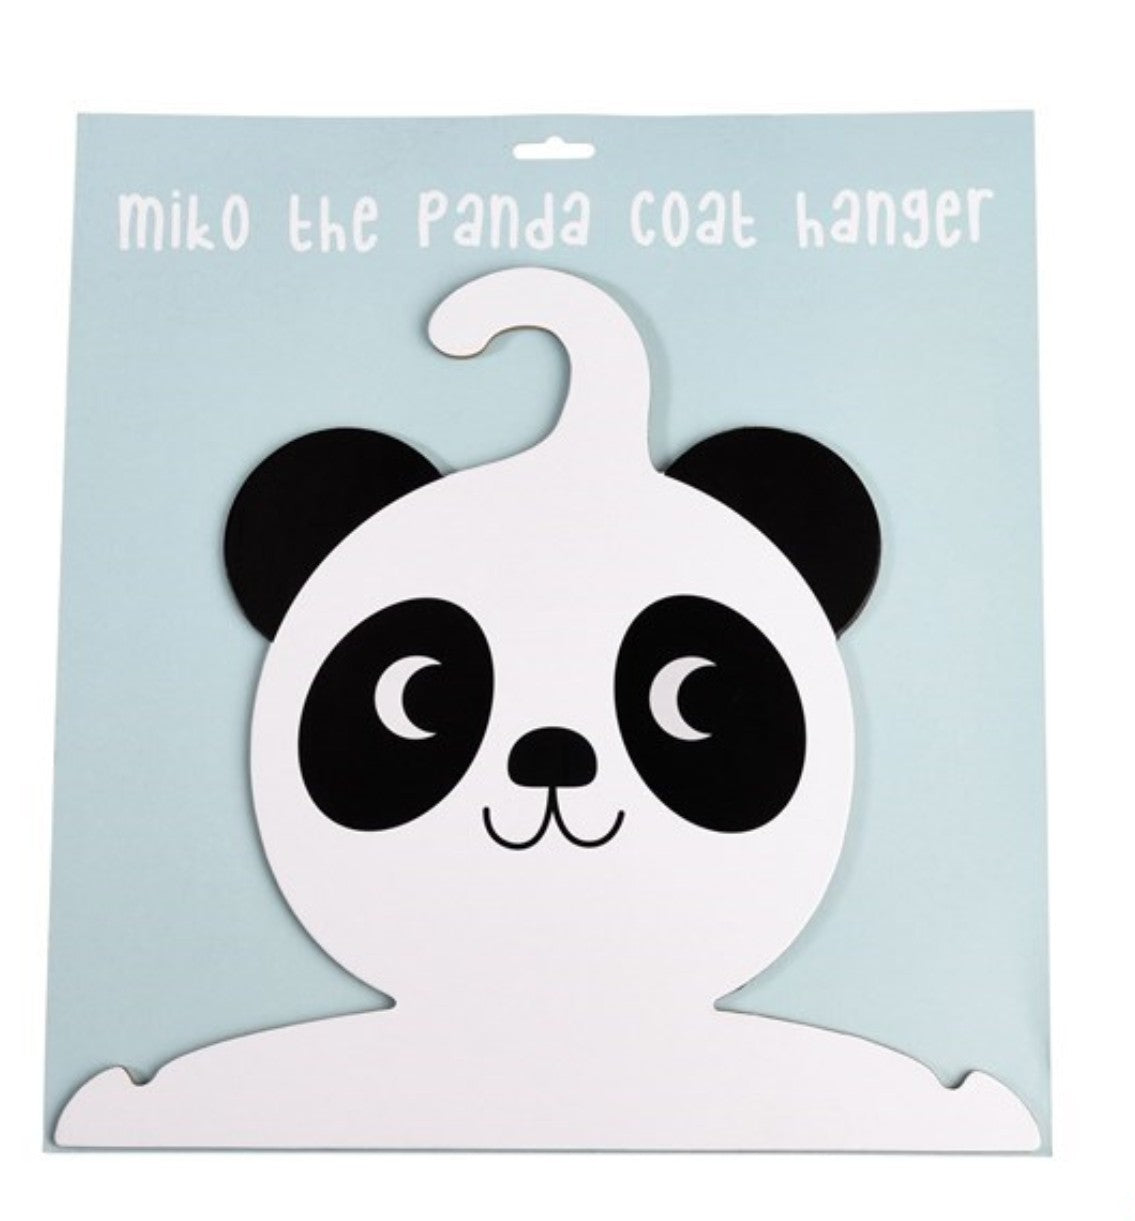 Kleiderbügel Hänger Wäschehänger Panda Rex London